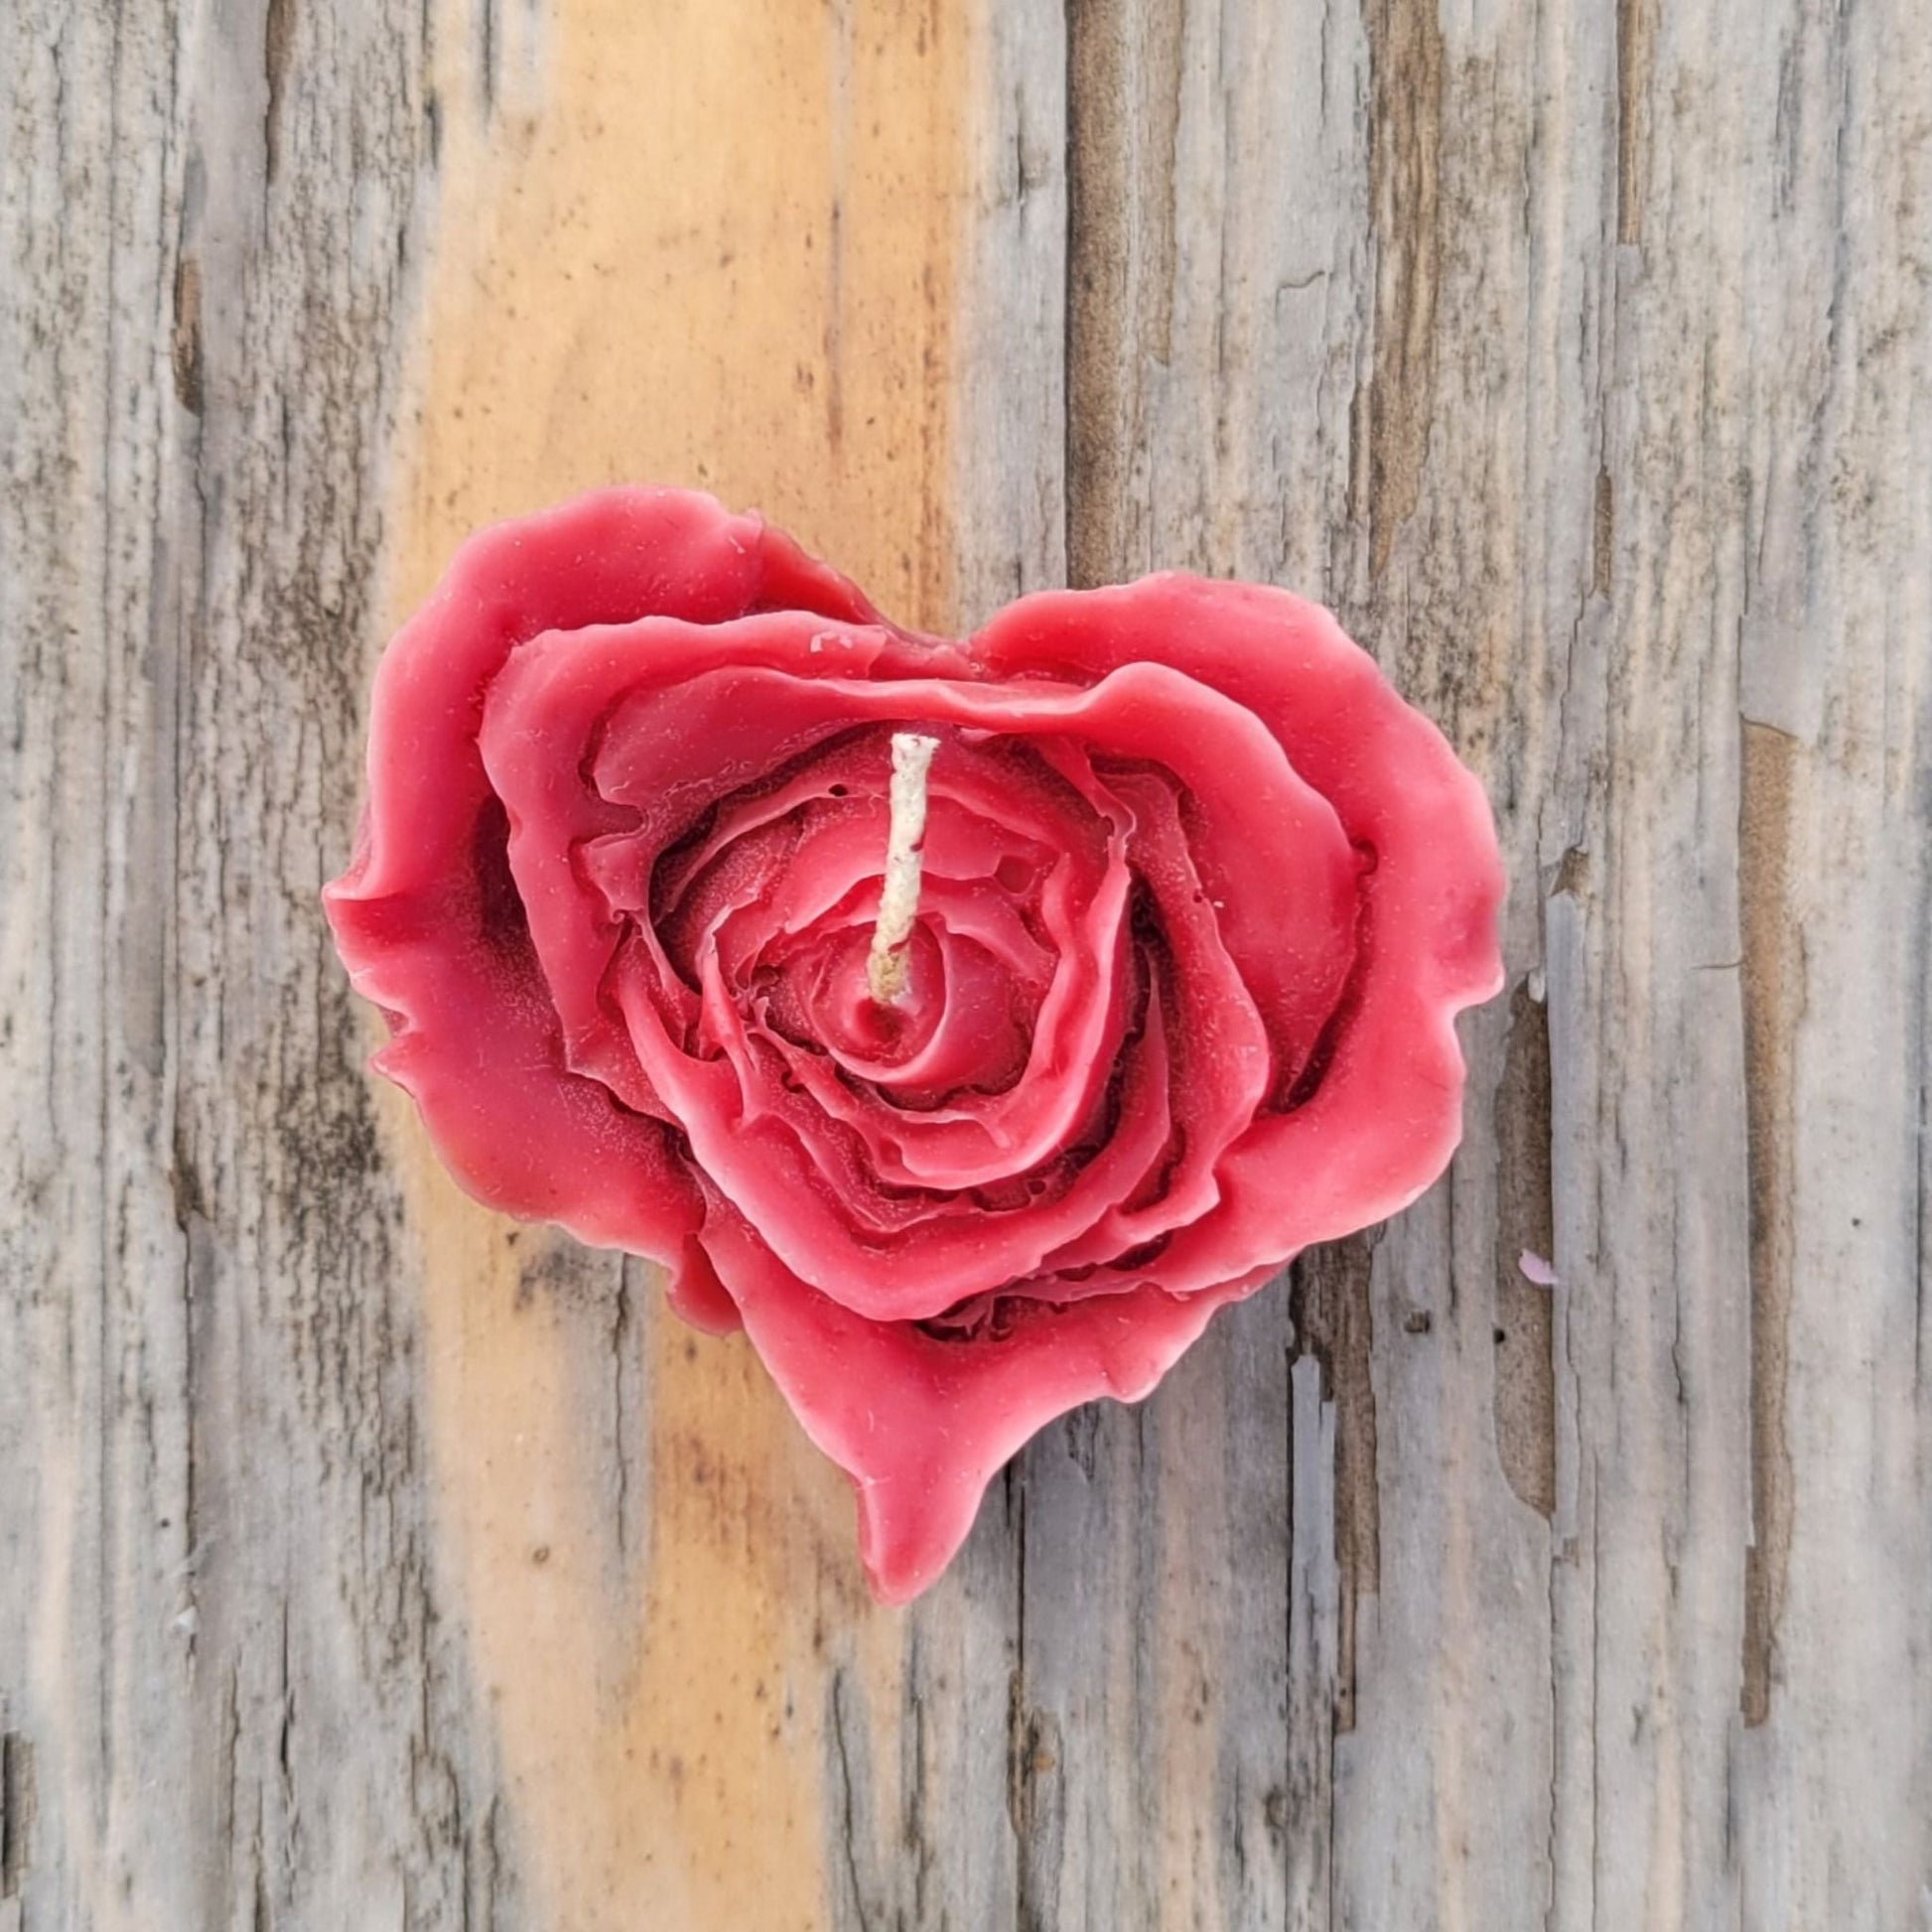 A handmade dark red heart shaped flower votive candle.